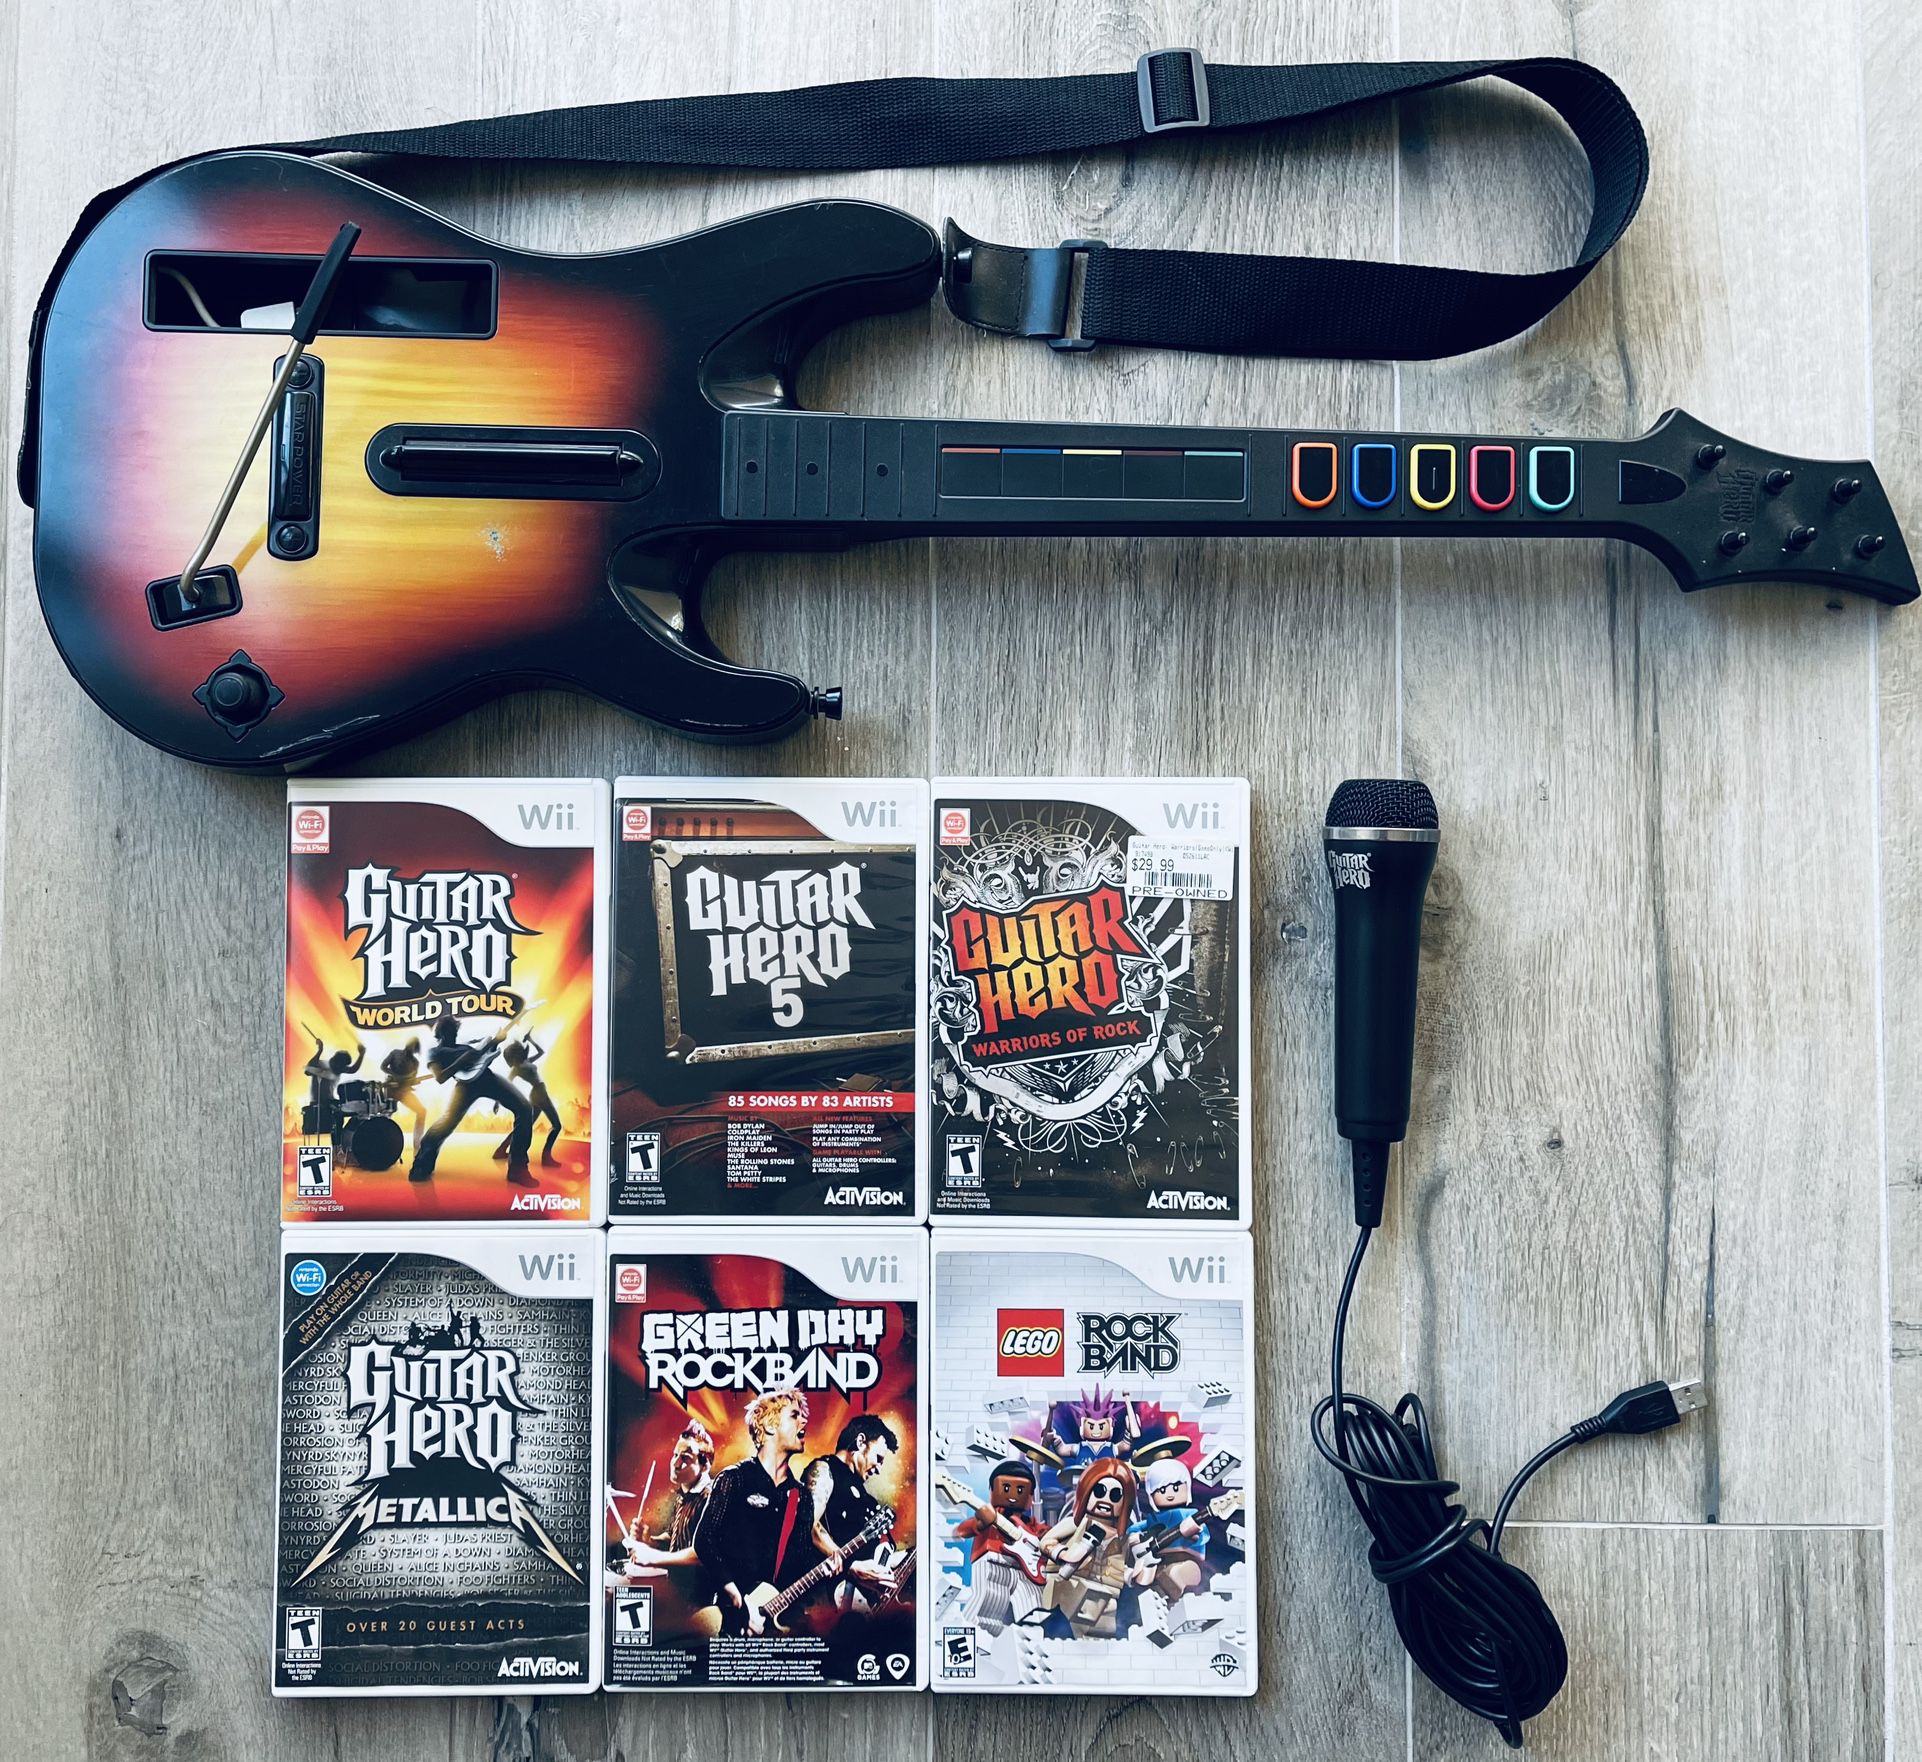 Guitar Hero & Rock Band Games & Accessories for Nintendo Wii Sale in Laguna Hills, CA - OfferUp